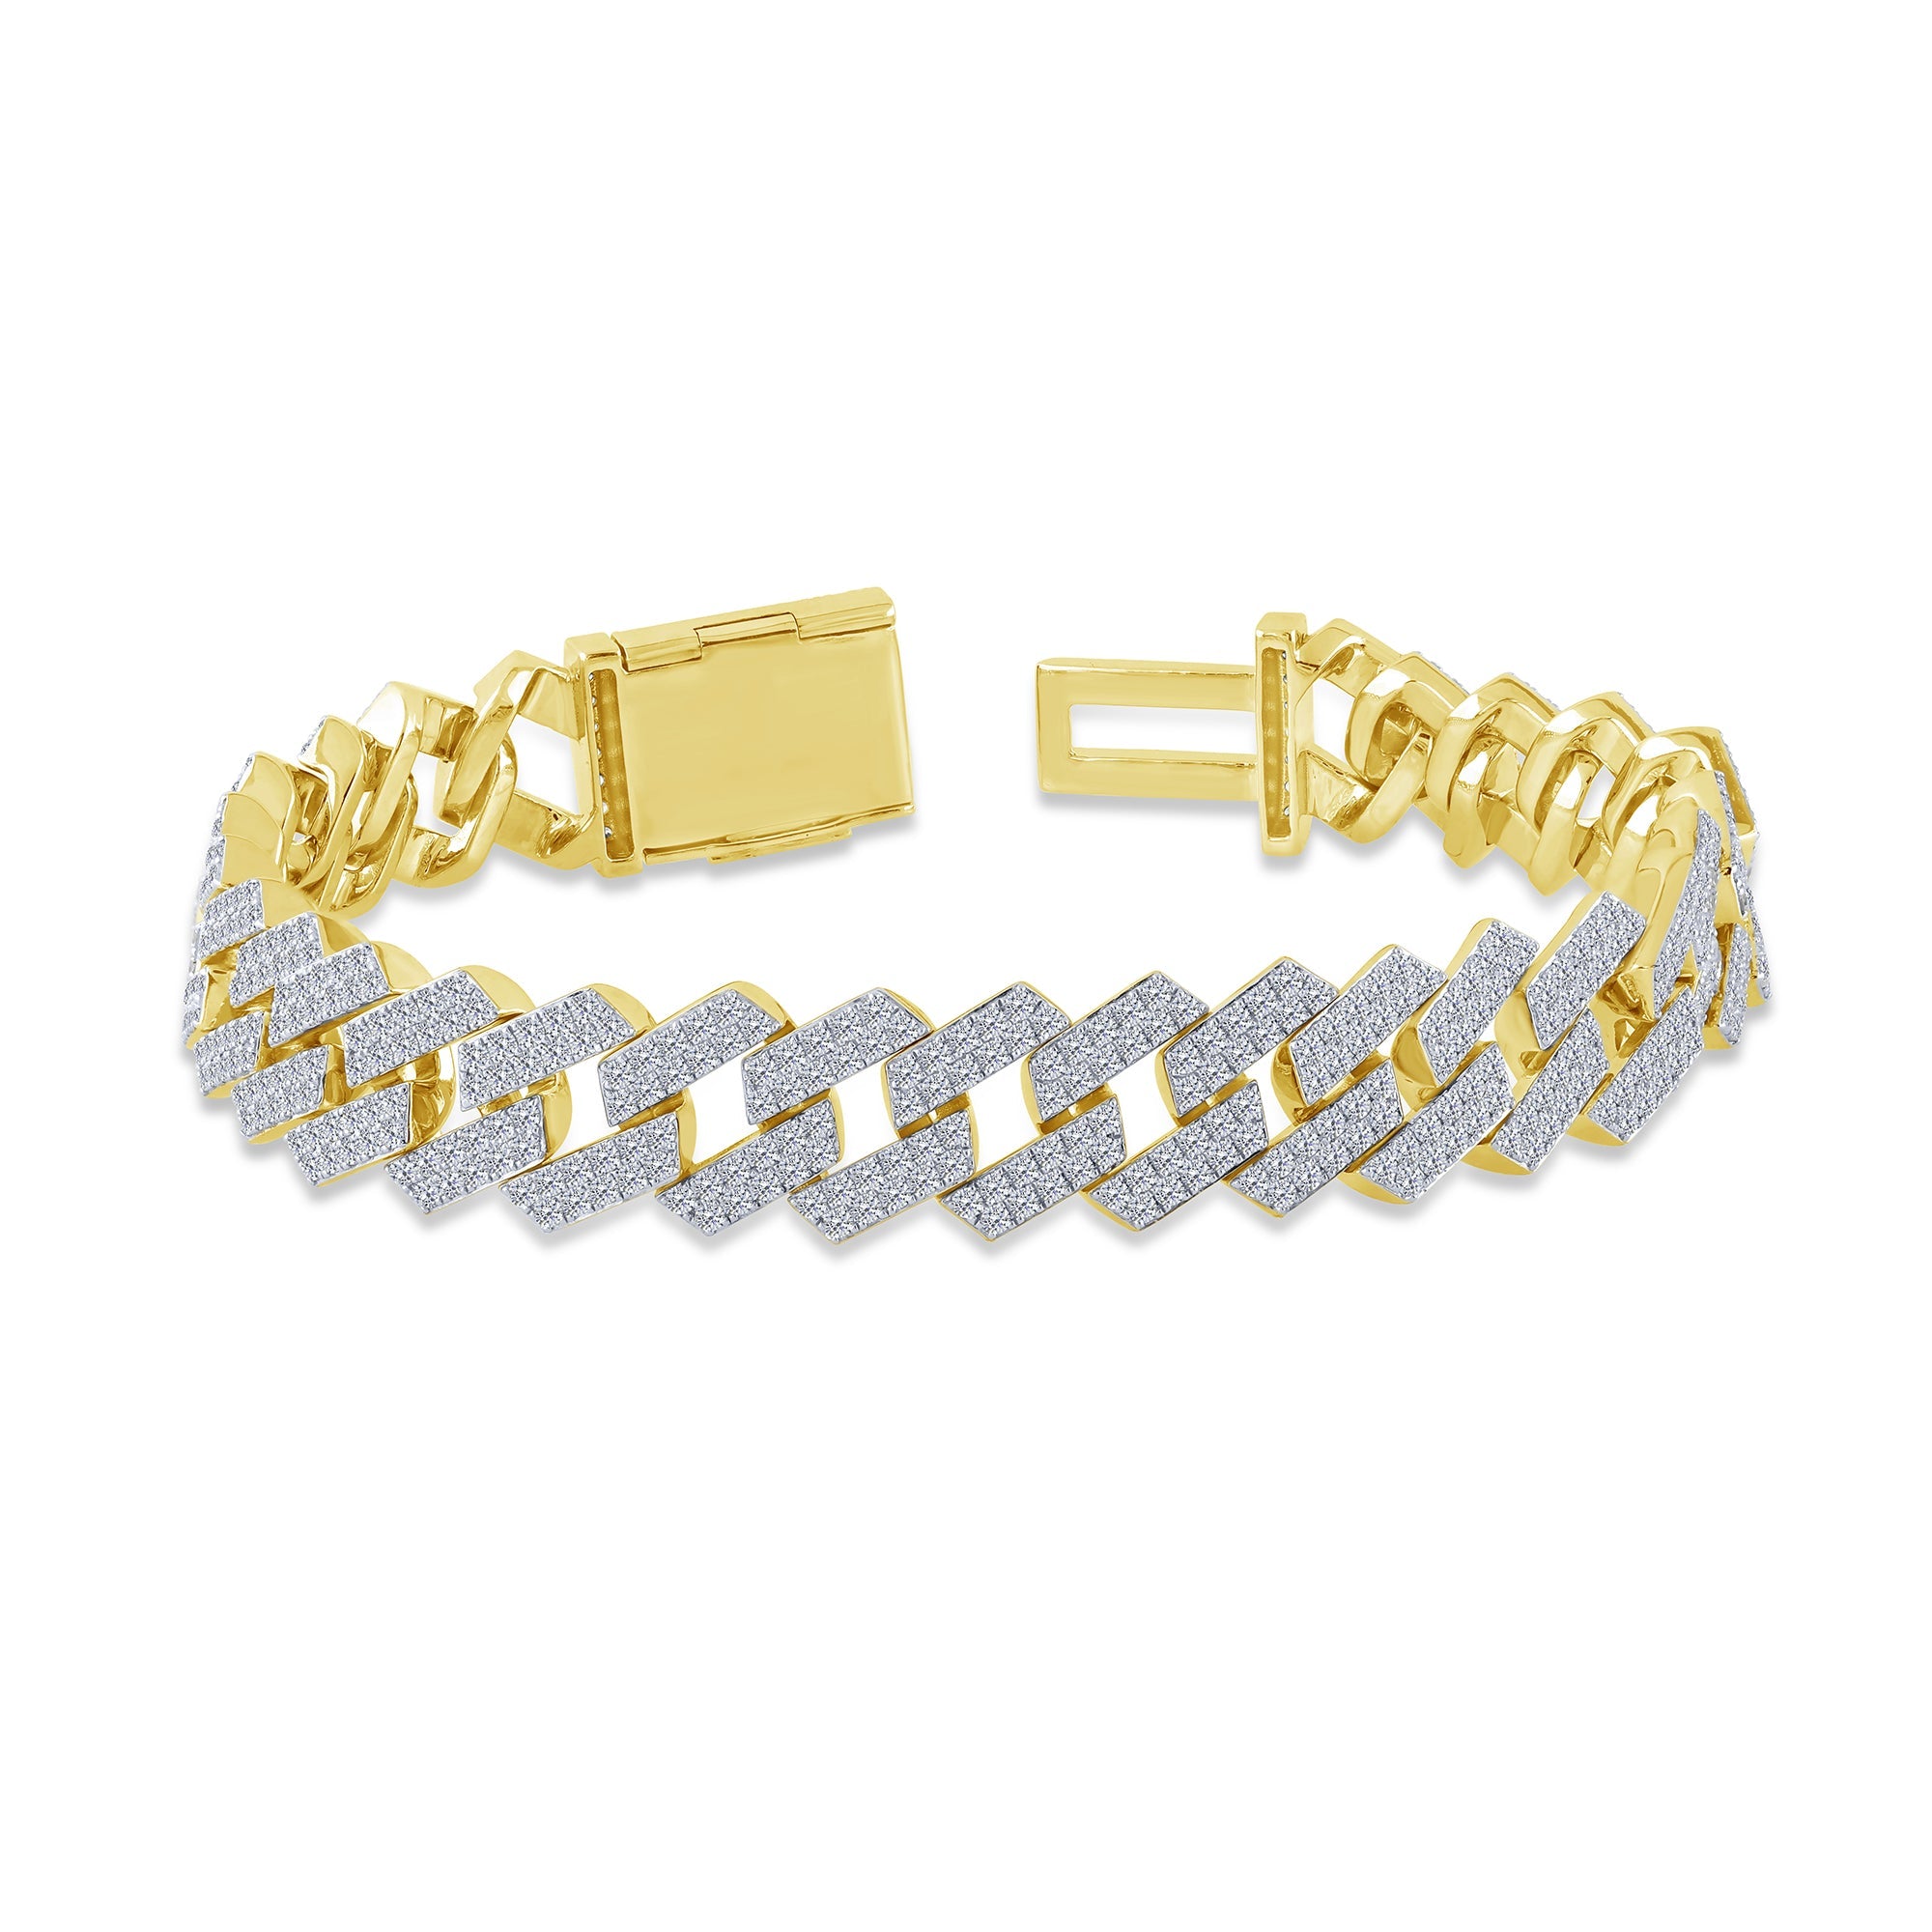 10K YELLOW GOLD 8.01 Ctw Diamond Bracelet